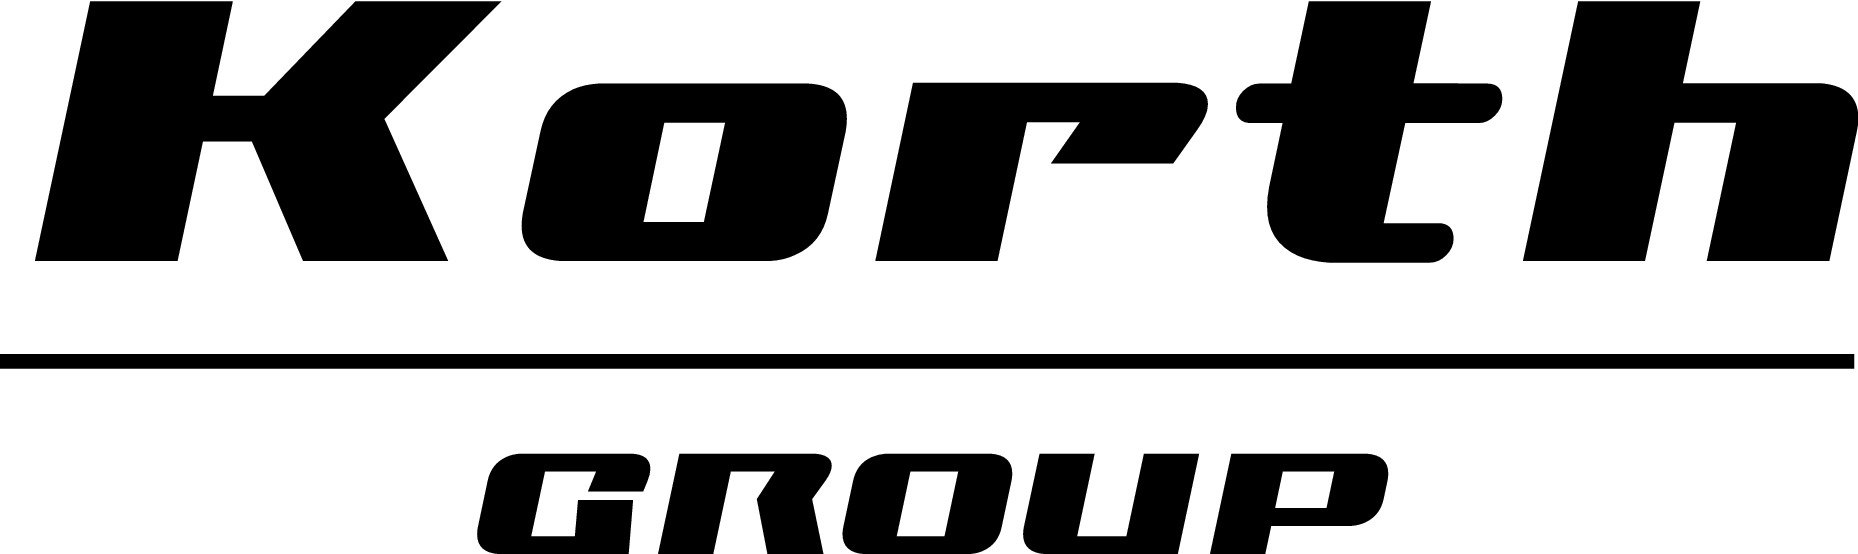 Korth-Group-logo-black-1858×554-300dpi